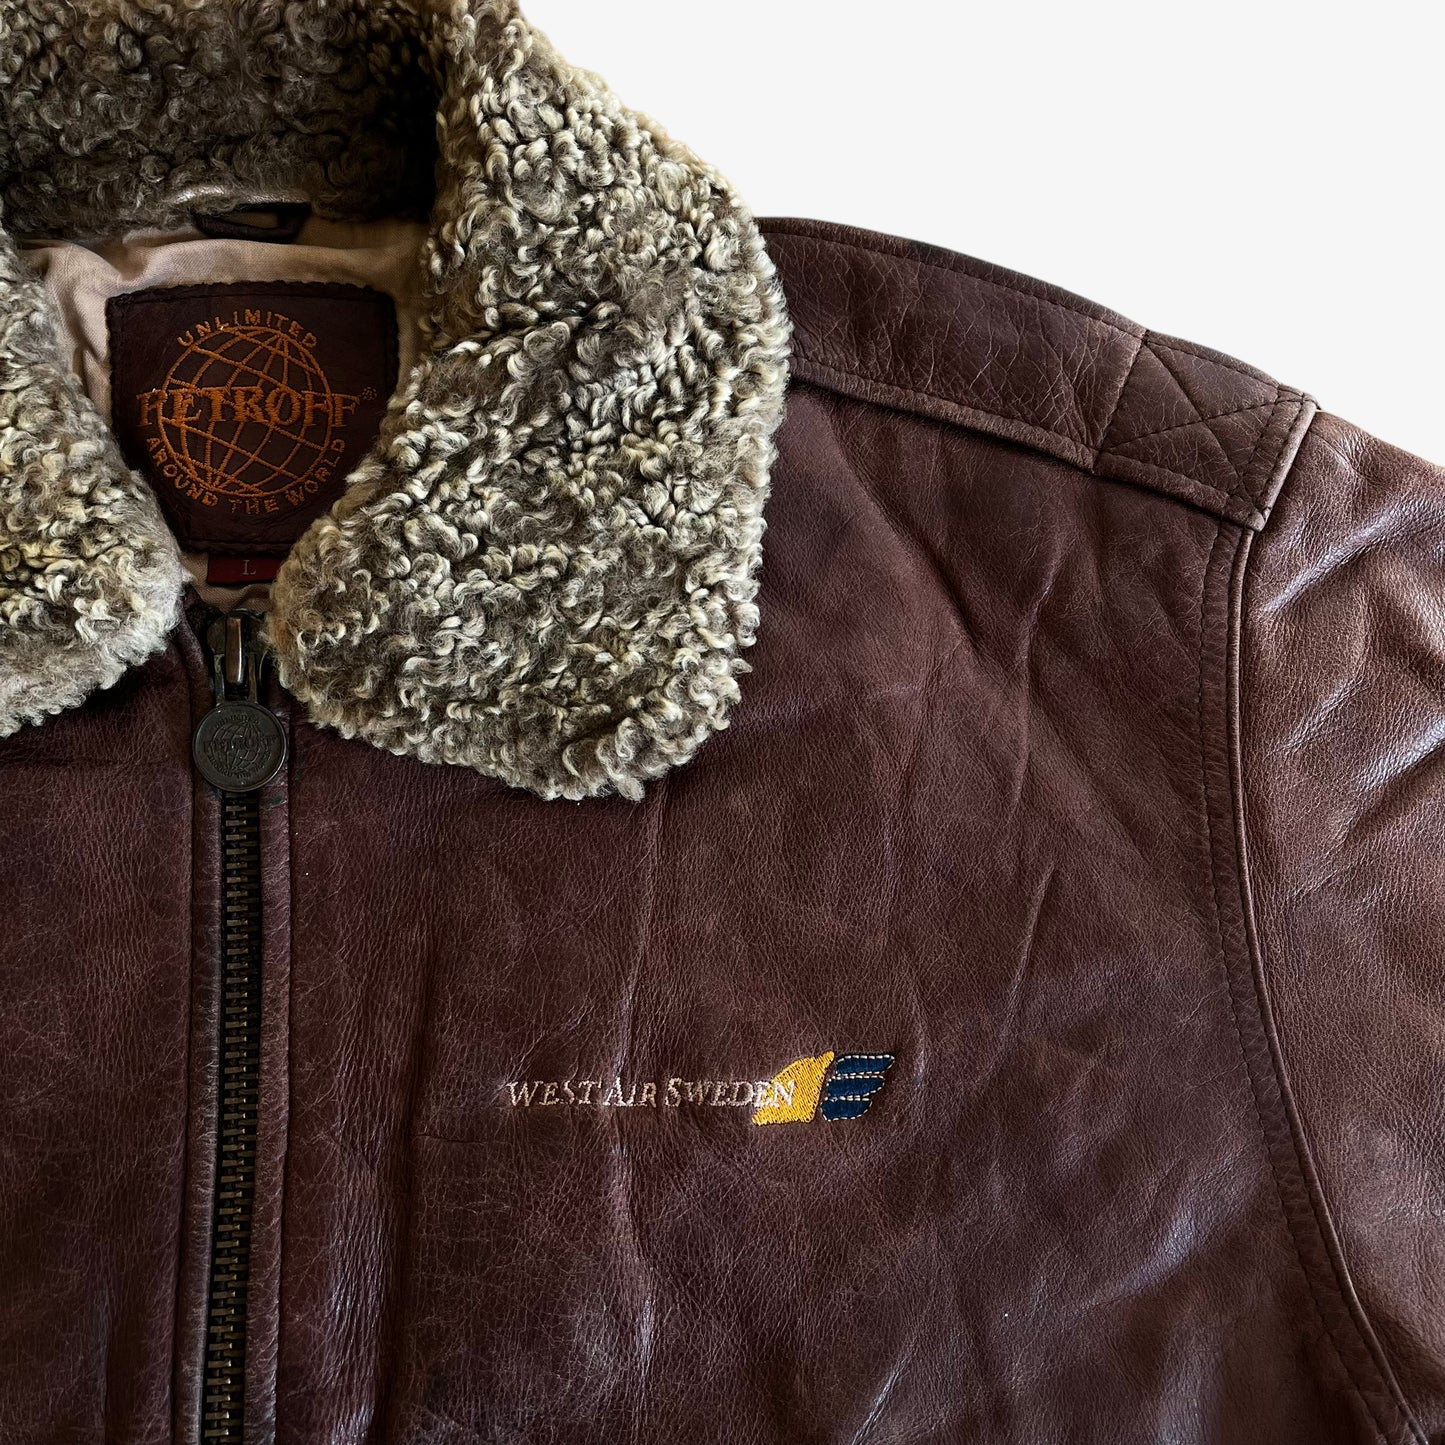 Vintage 90s Petroff West Air Sweden Brown Leather Pilot Jacket With Fur Collar Logo - Casspios Dream